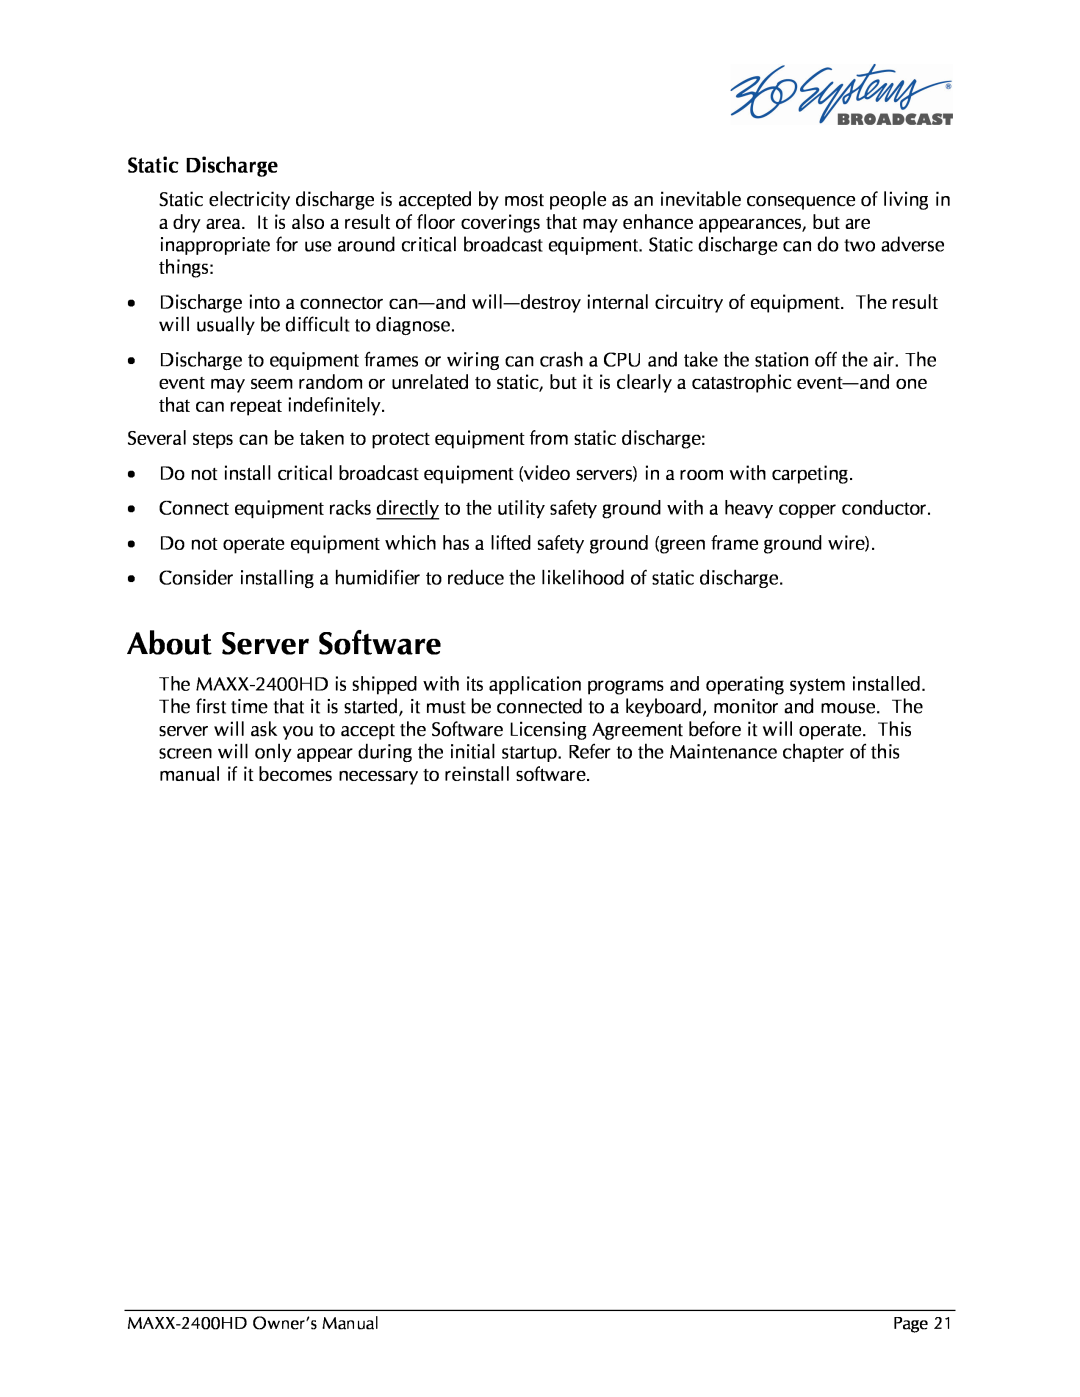 Maxxsonics MAXX-2400HD manual About Server Software, Static Discharge 